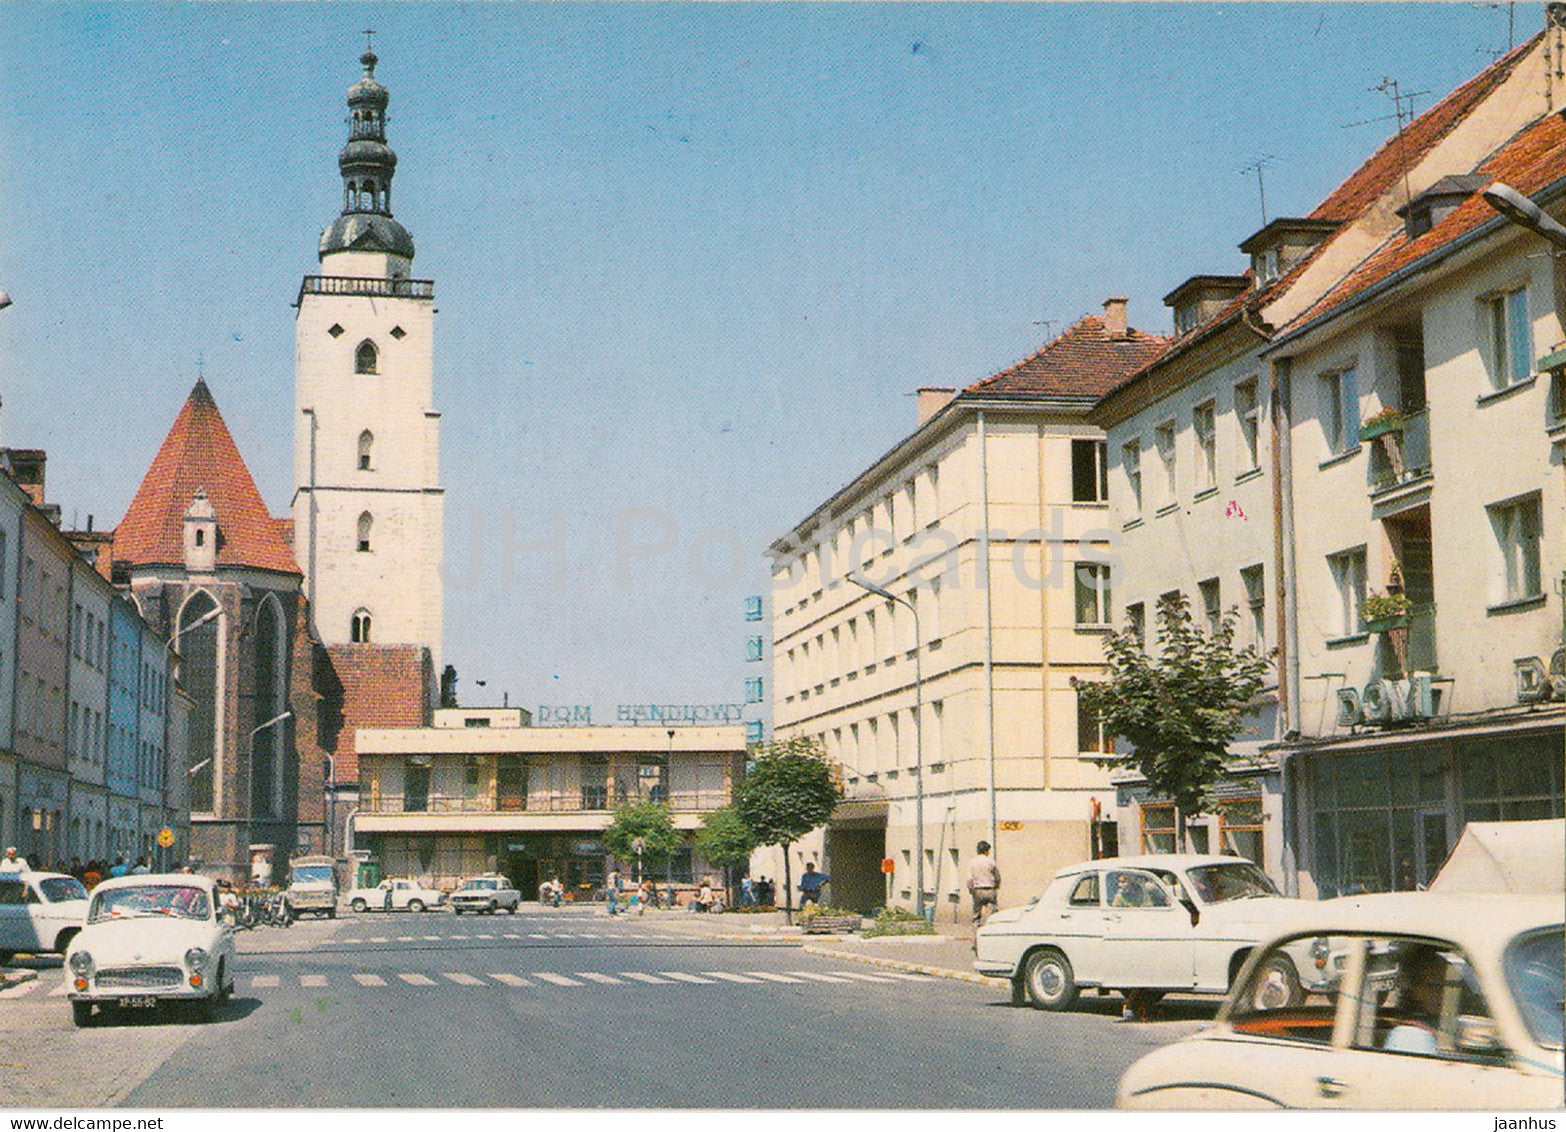 Olesnica - market - church - car Polski Fiat - Poland - used - JH Postcards